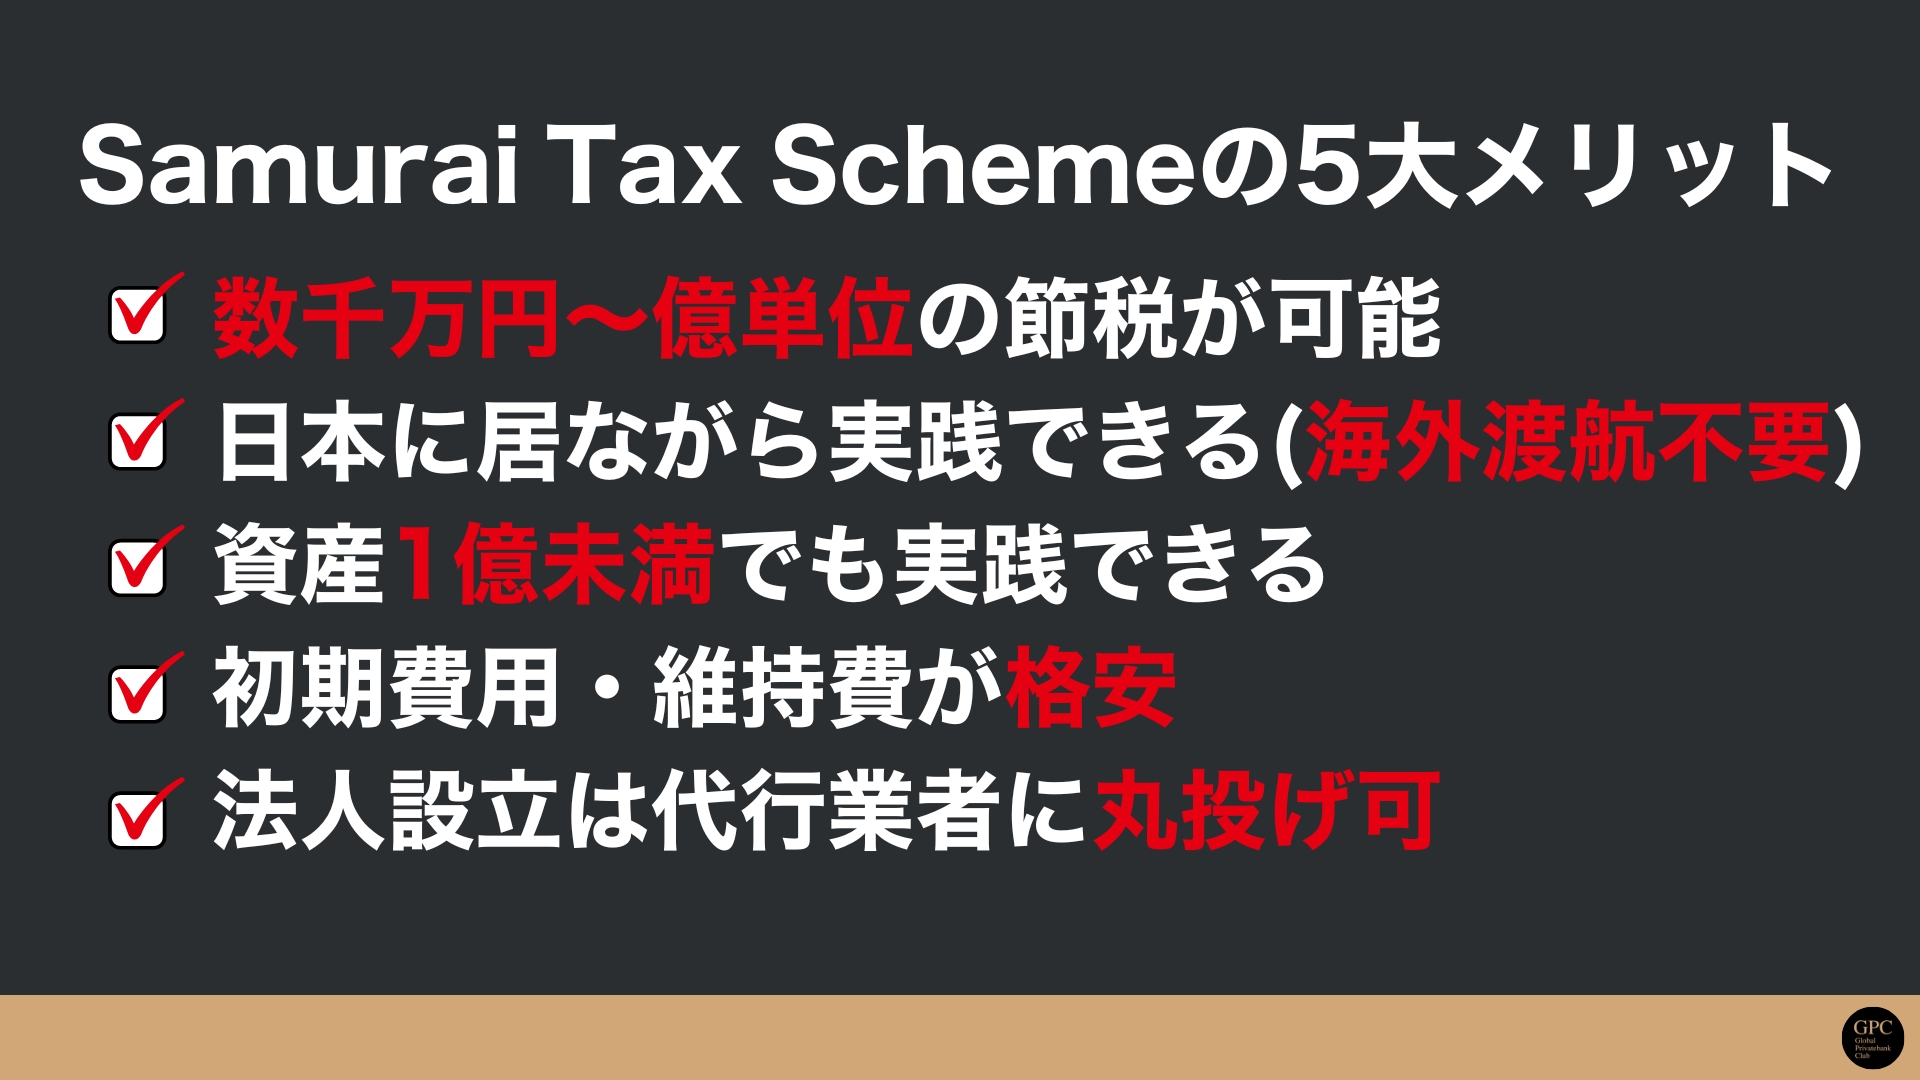 Samurai Tax Scheme メリット